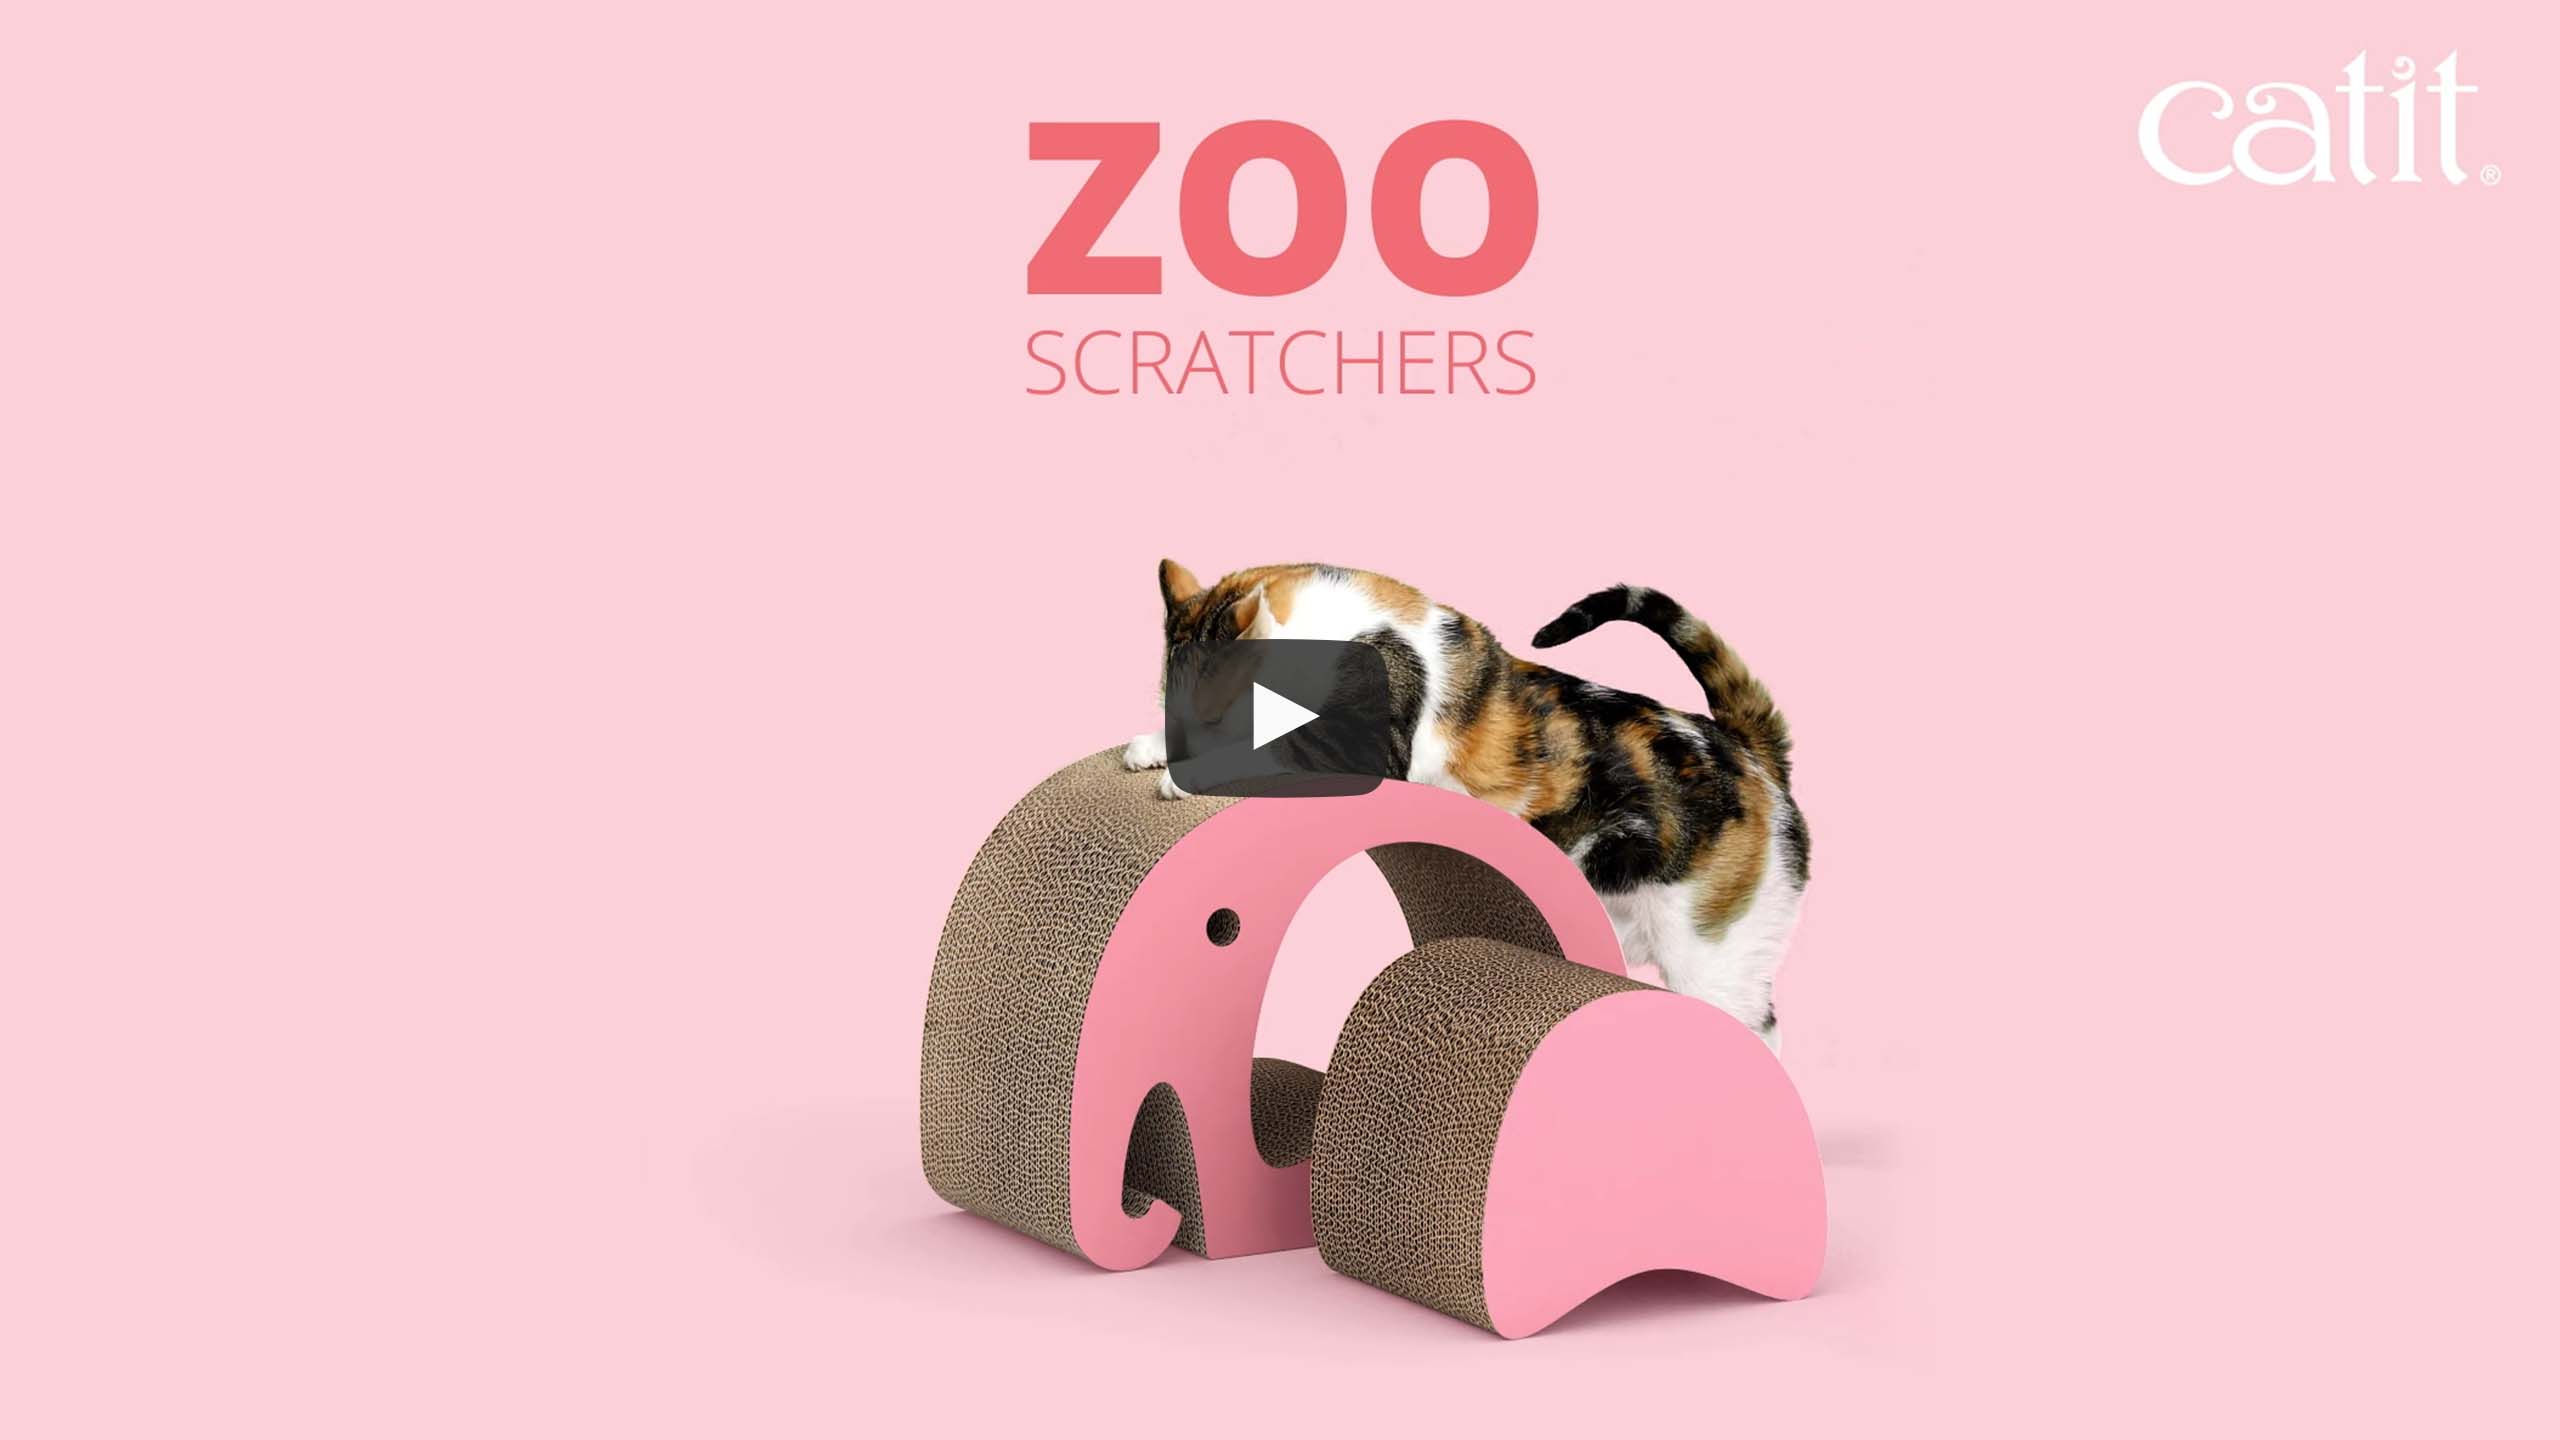 Arranhadores Zoo Catit vídeo